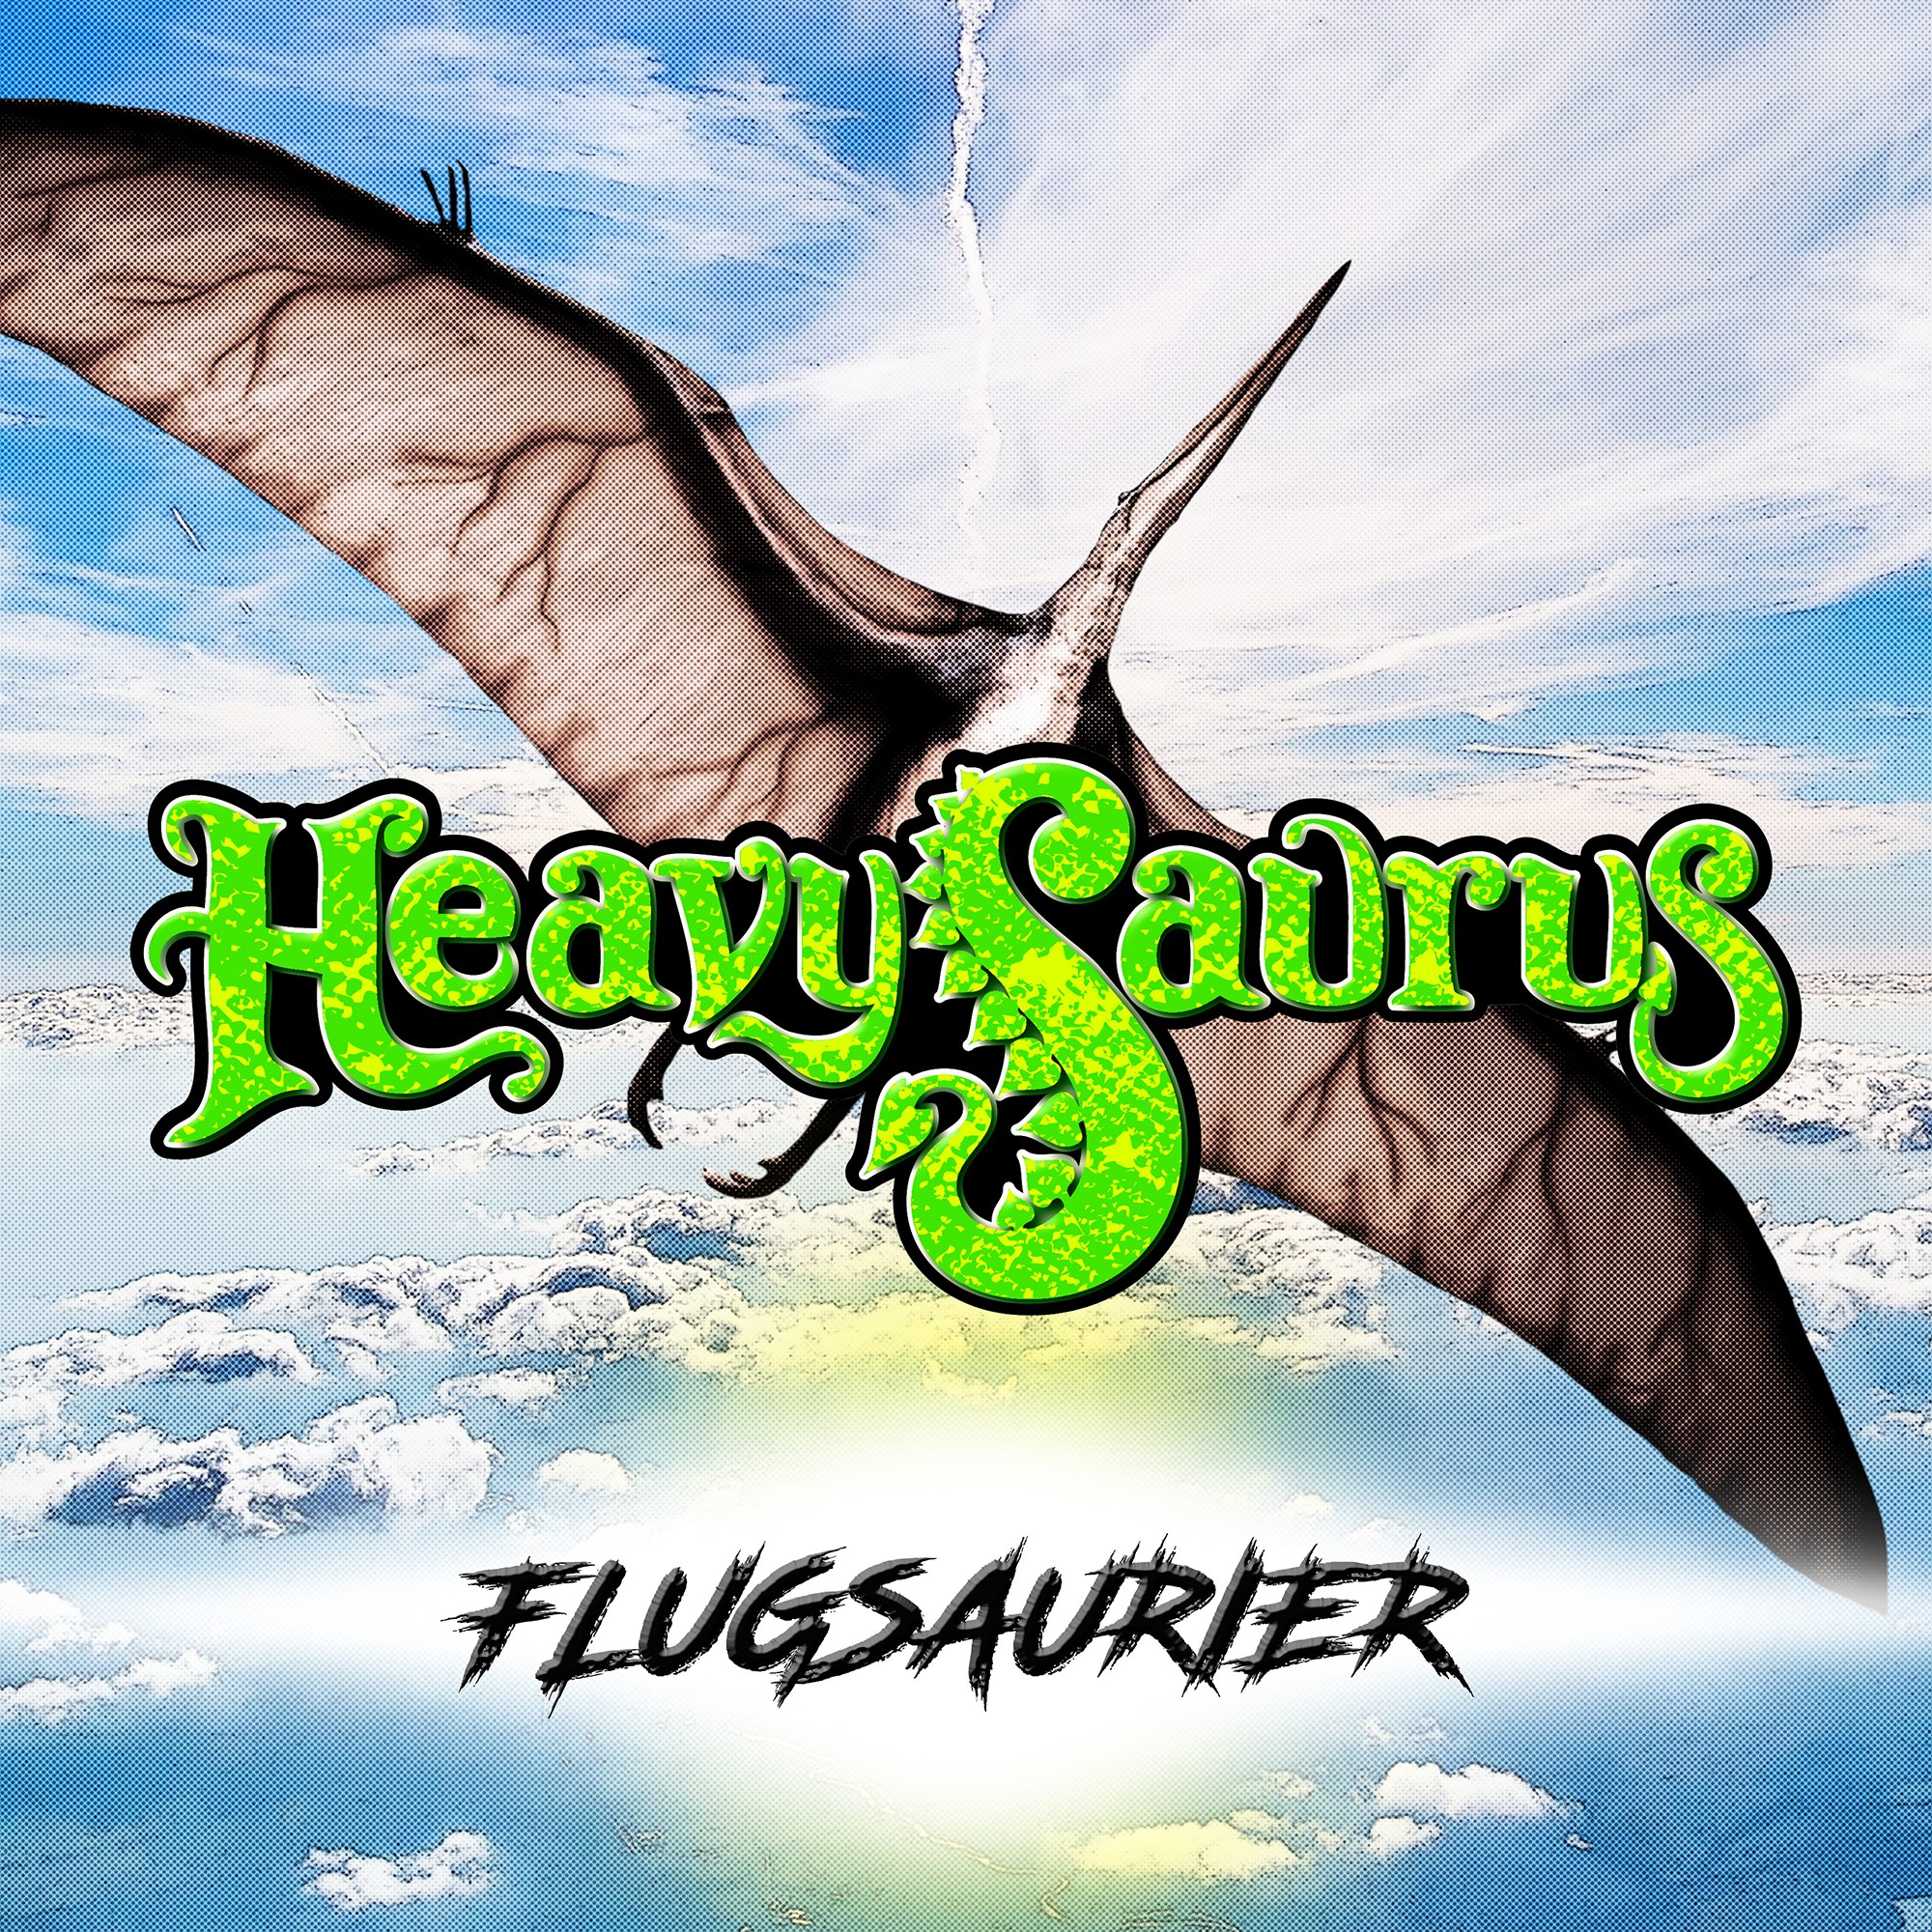 Heavysaurus: Flugsaurier